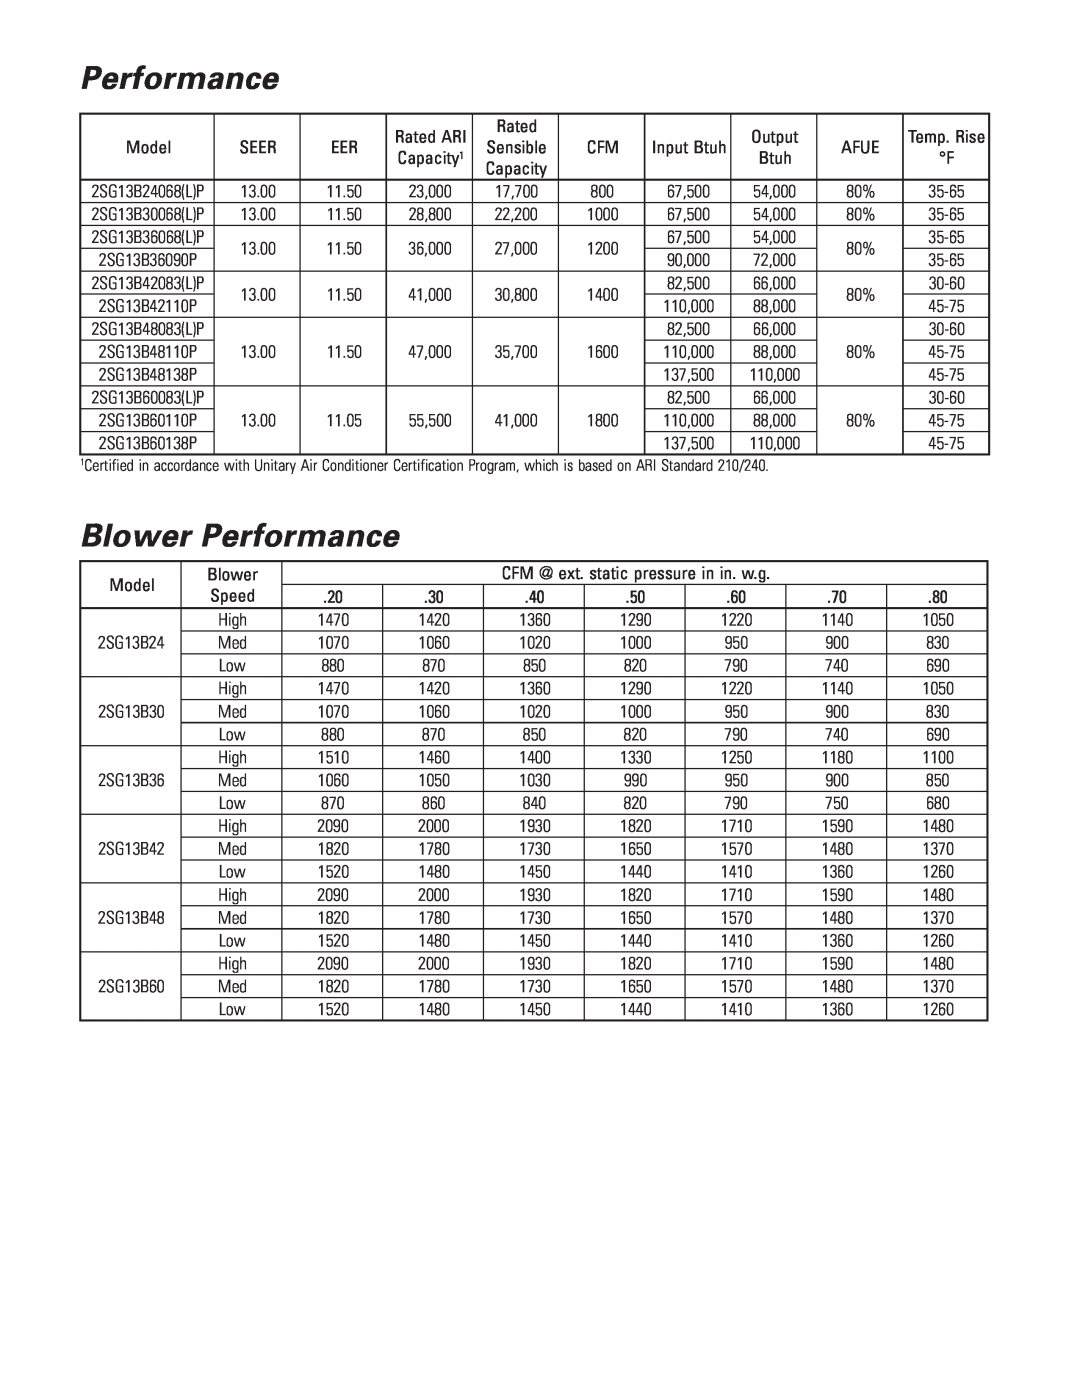 Ducane (HVAC) 2SG13B warranty Blower Performance 